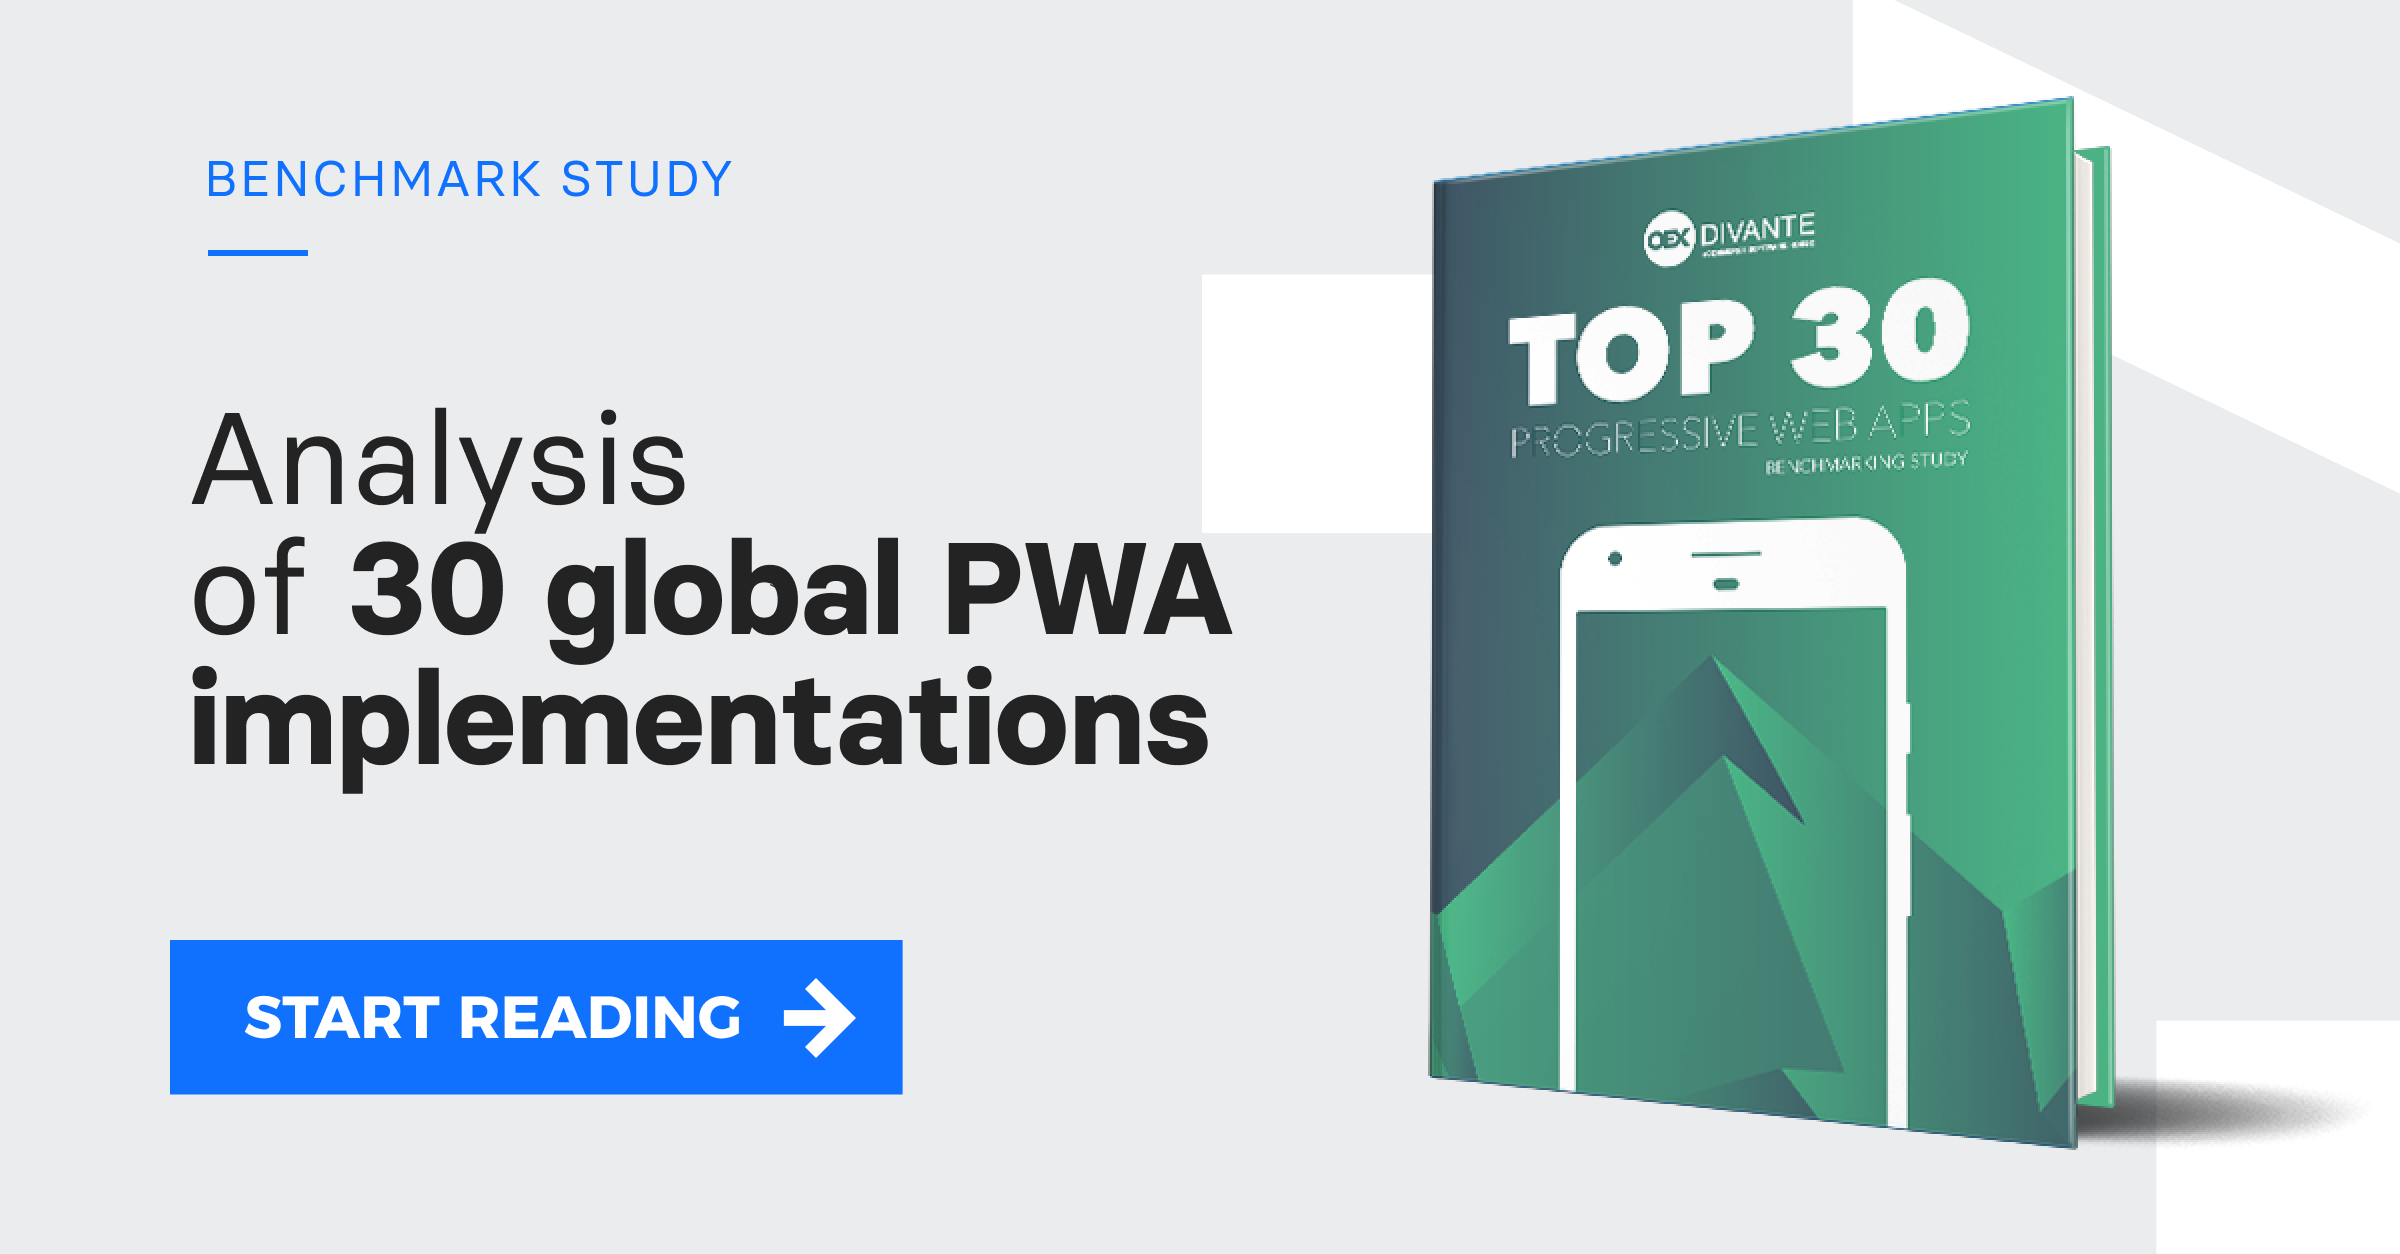 TOP 30 PWAs - Download FREE Benchmarking Study